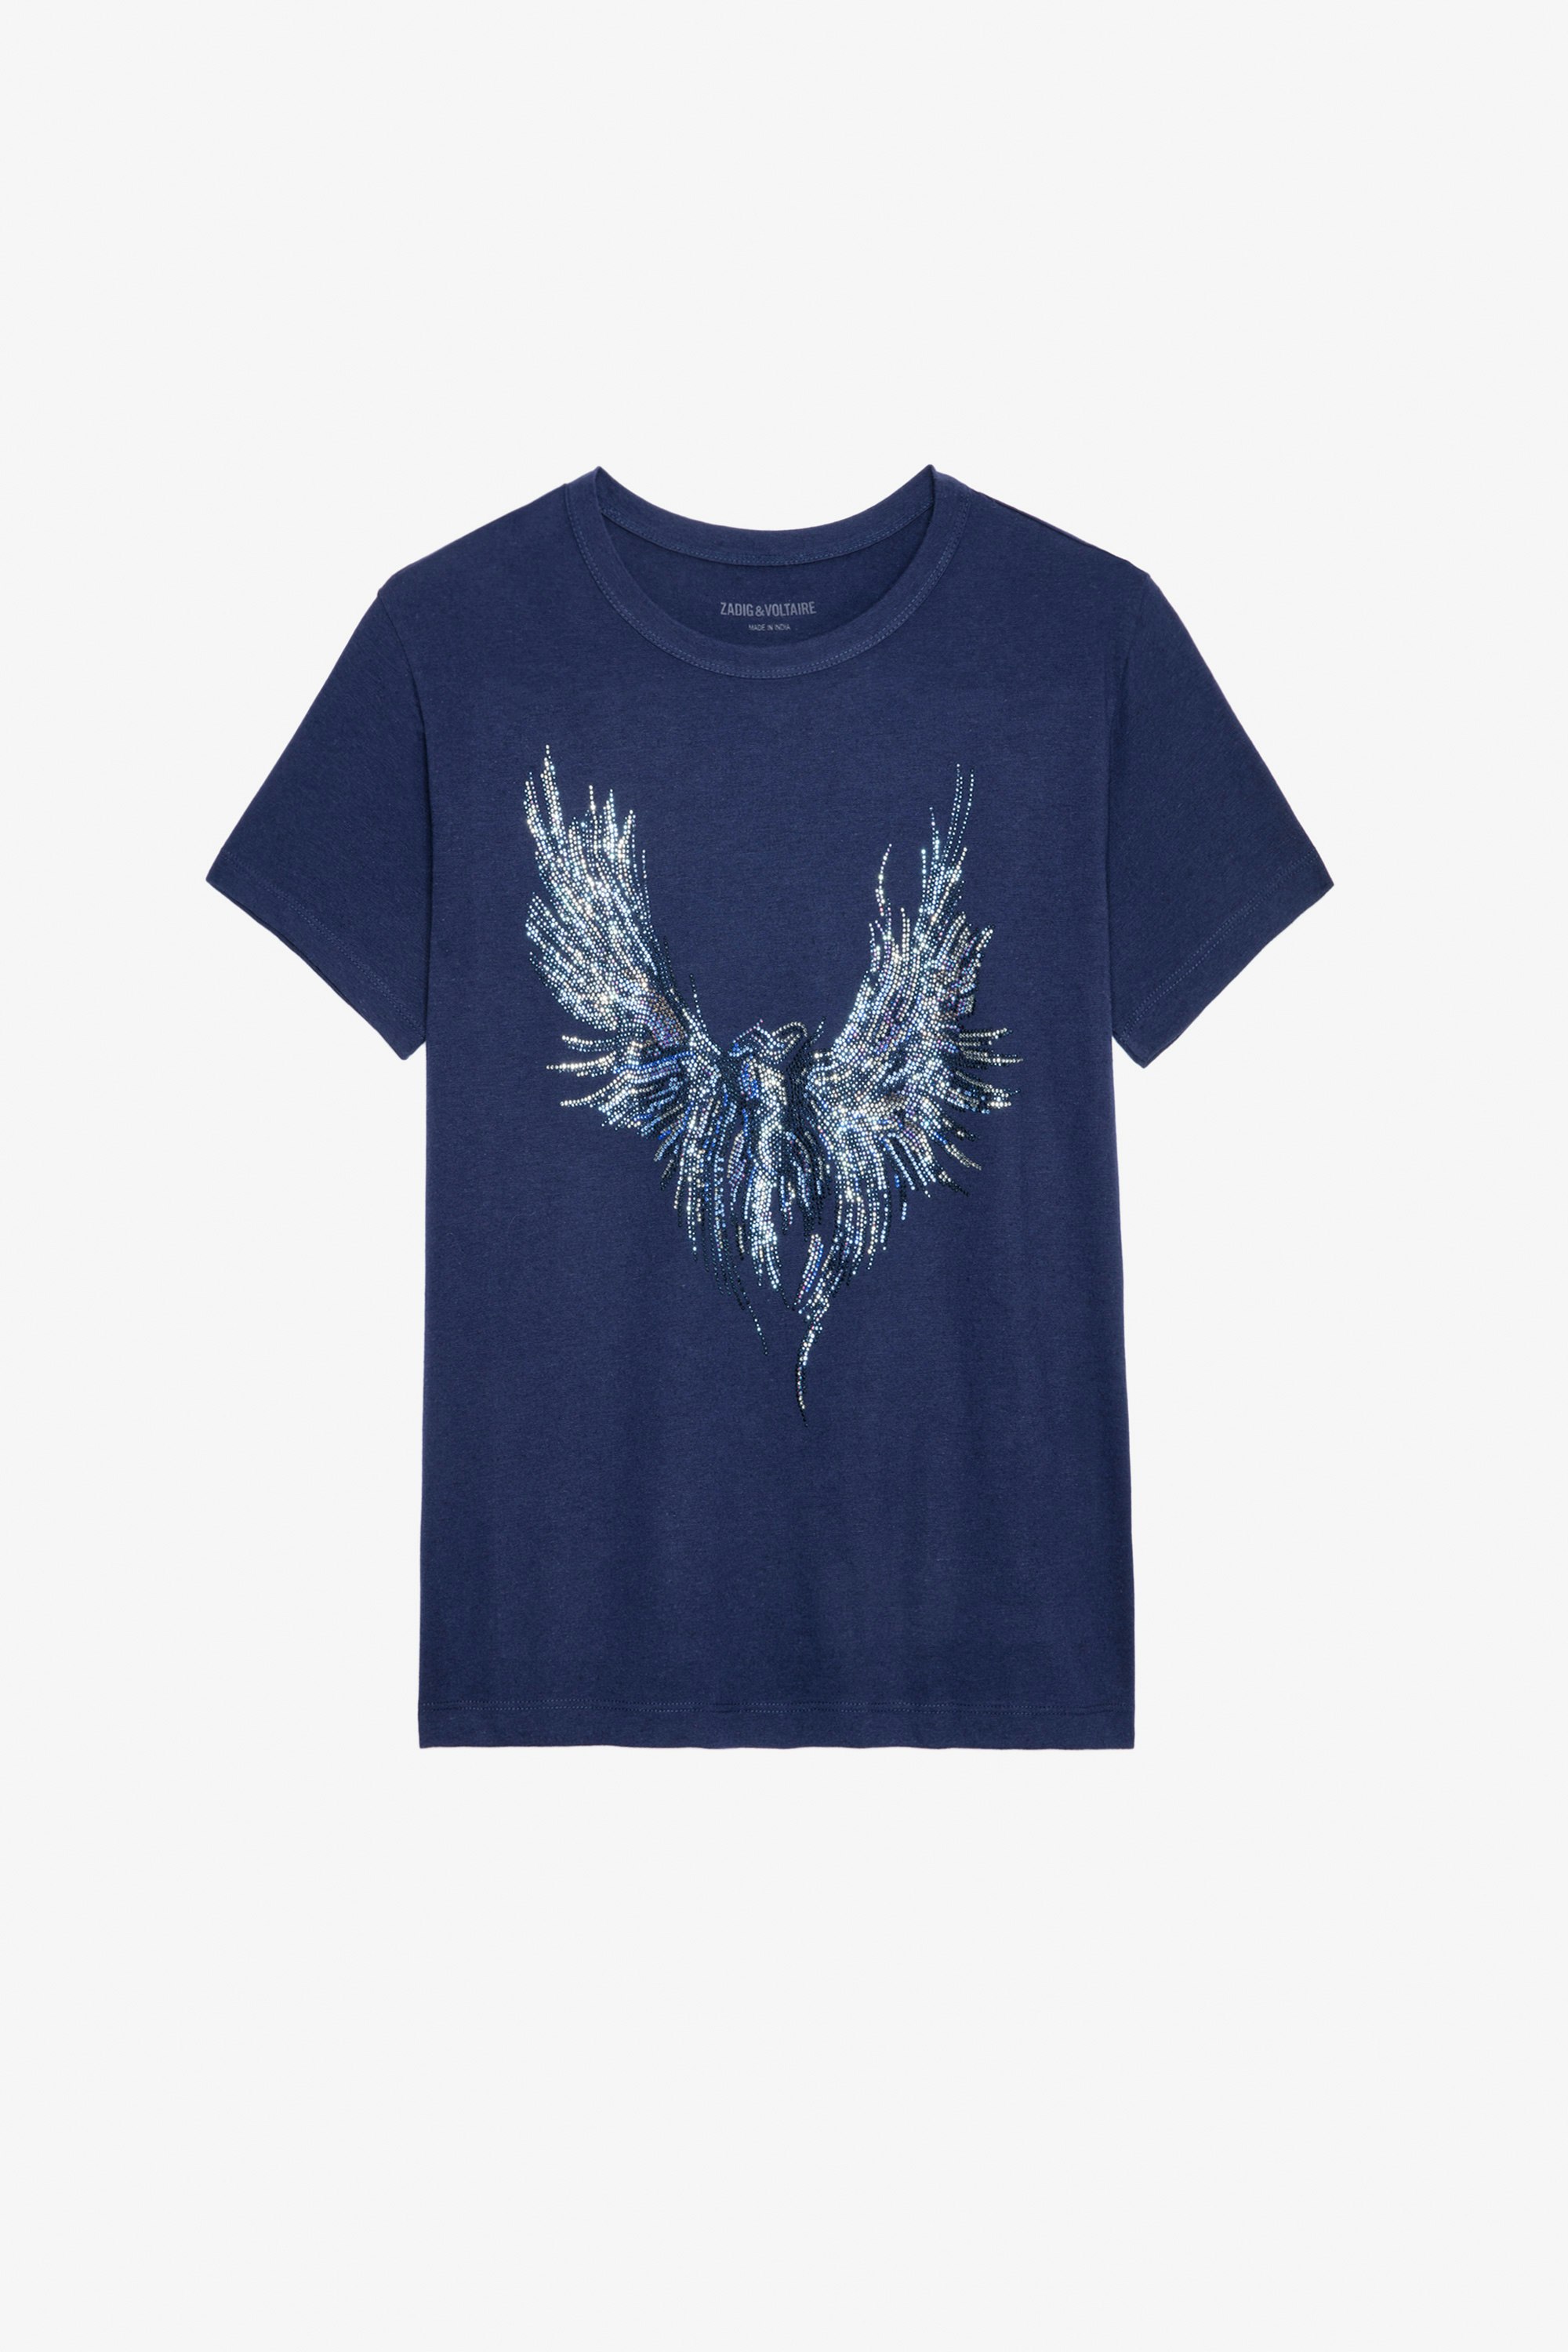 Marta T-shirt - Women's cotton t-shirt with rhinestone wing motif on front.